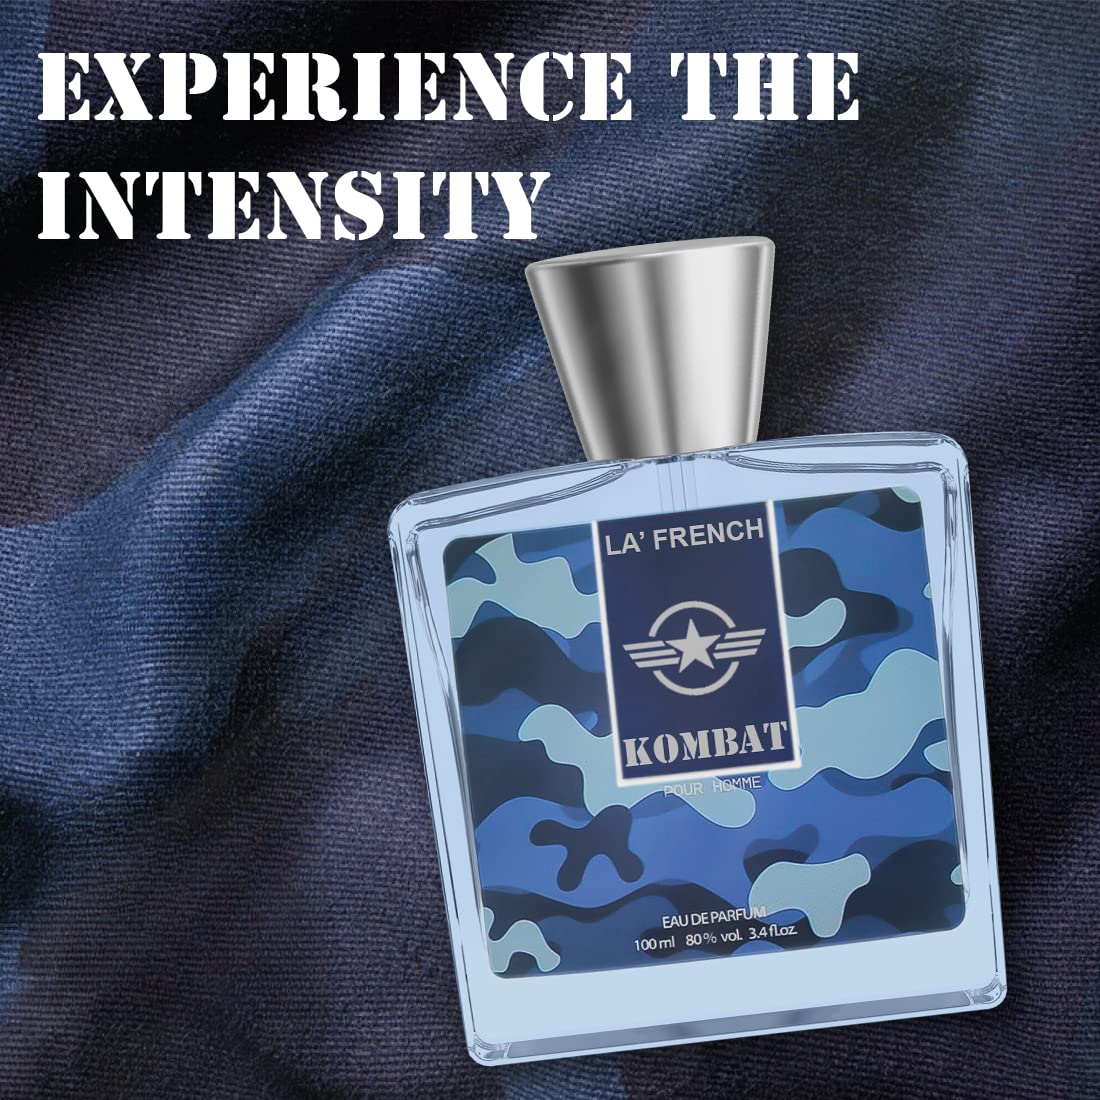 LA' French Kombat Liquid Perfume For Men, 100ml Luxury Gift, Extra Long Lasting Smell, Premium French Fragrance Scent, Eau De Parfum (Fresh)